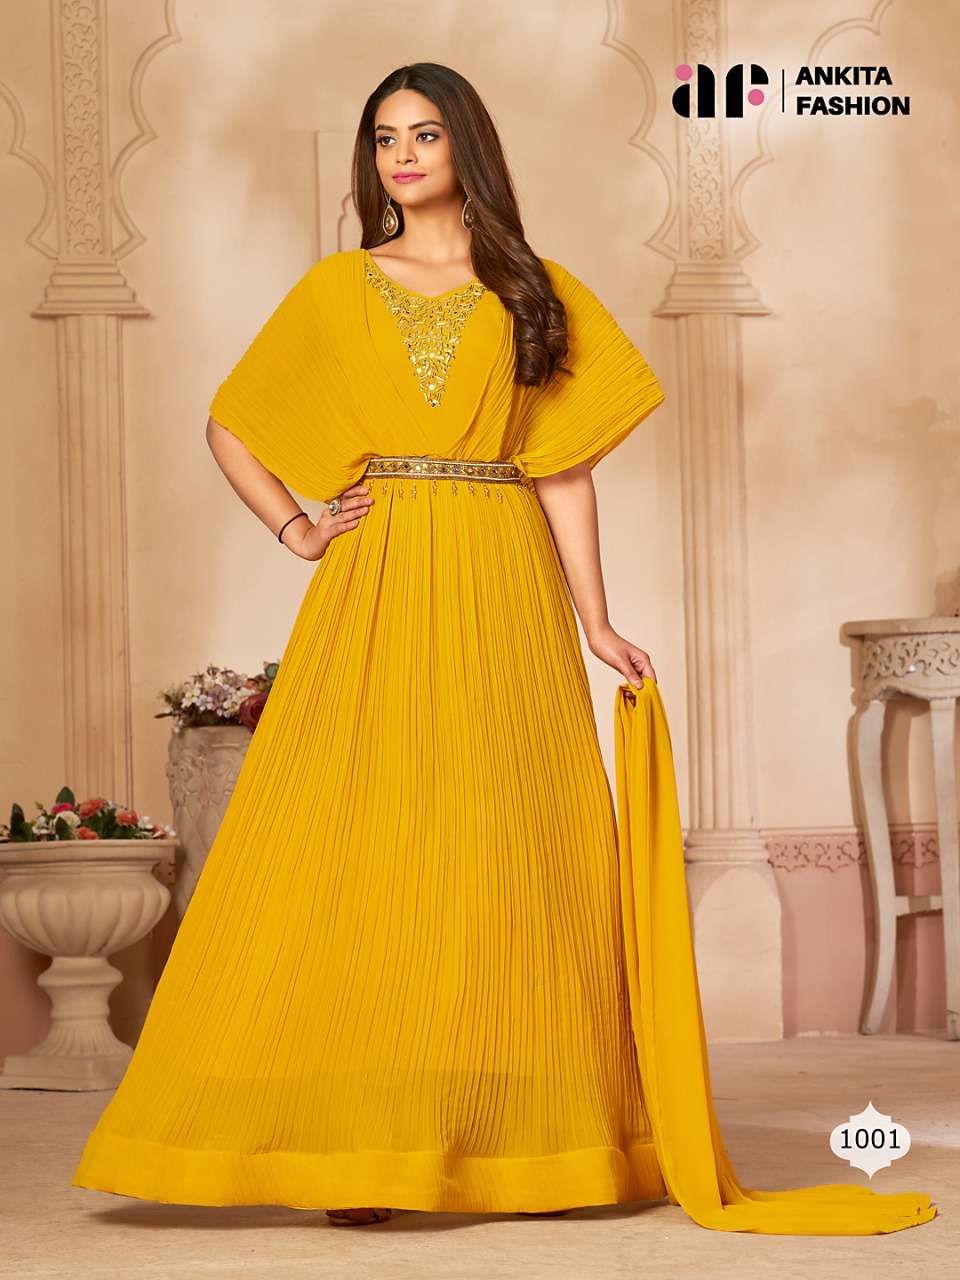 ankita fashion anamika 1001-1005 series georgette designer full flare gown catalogue surat 